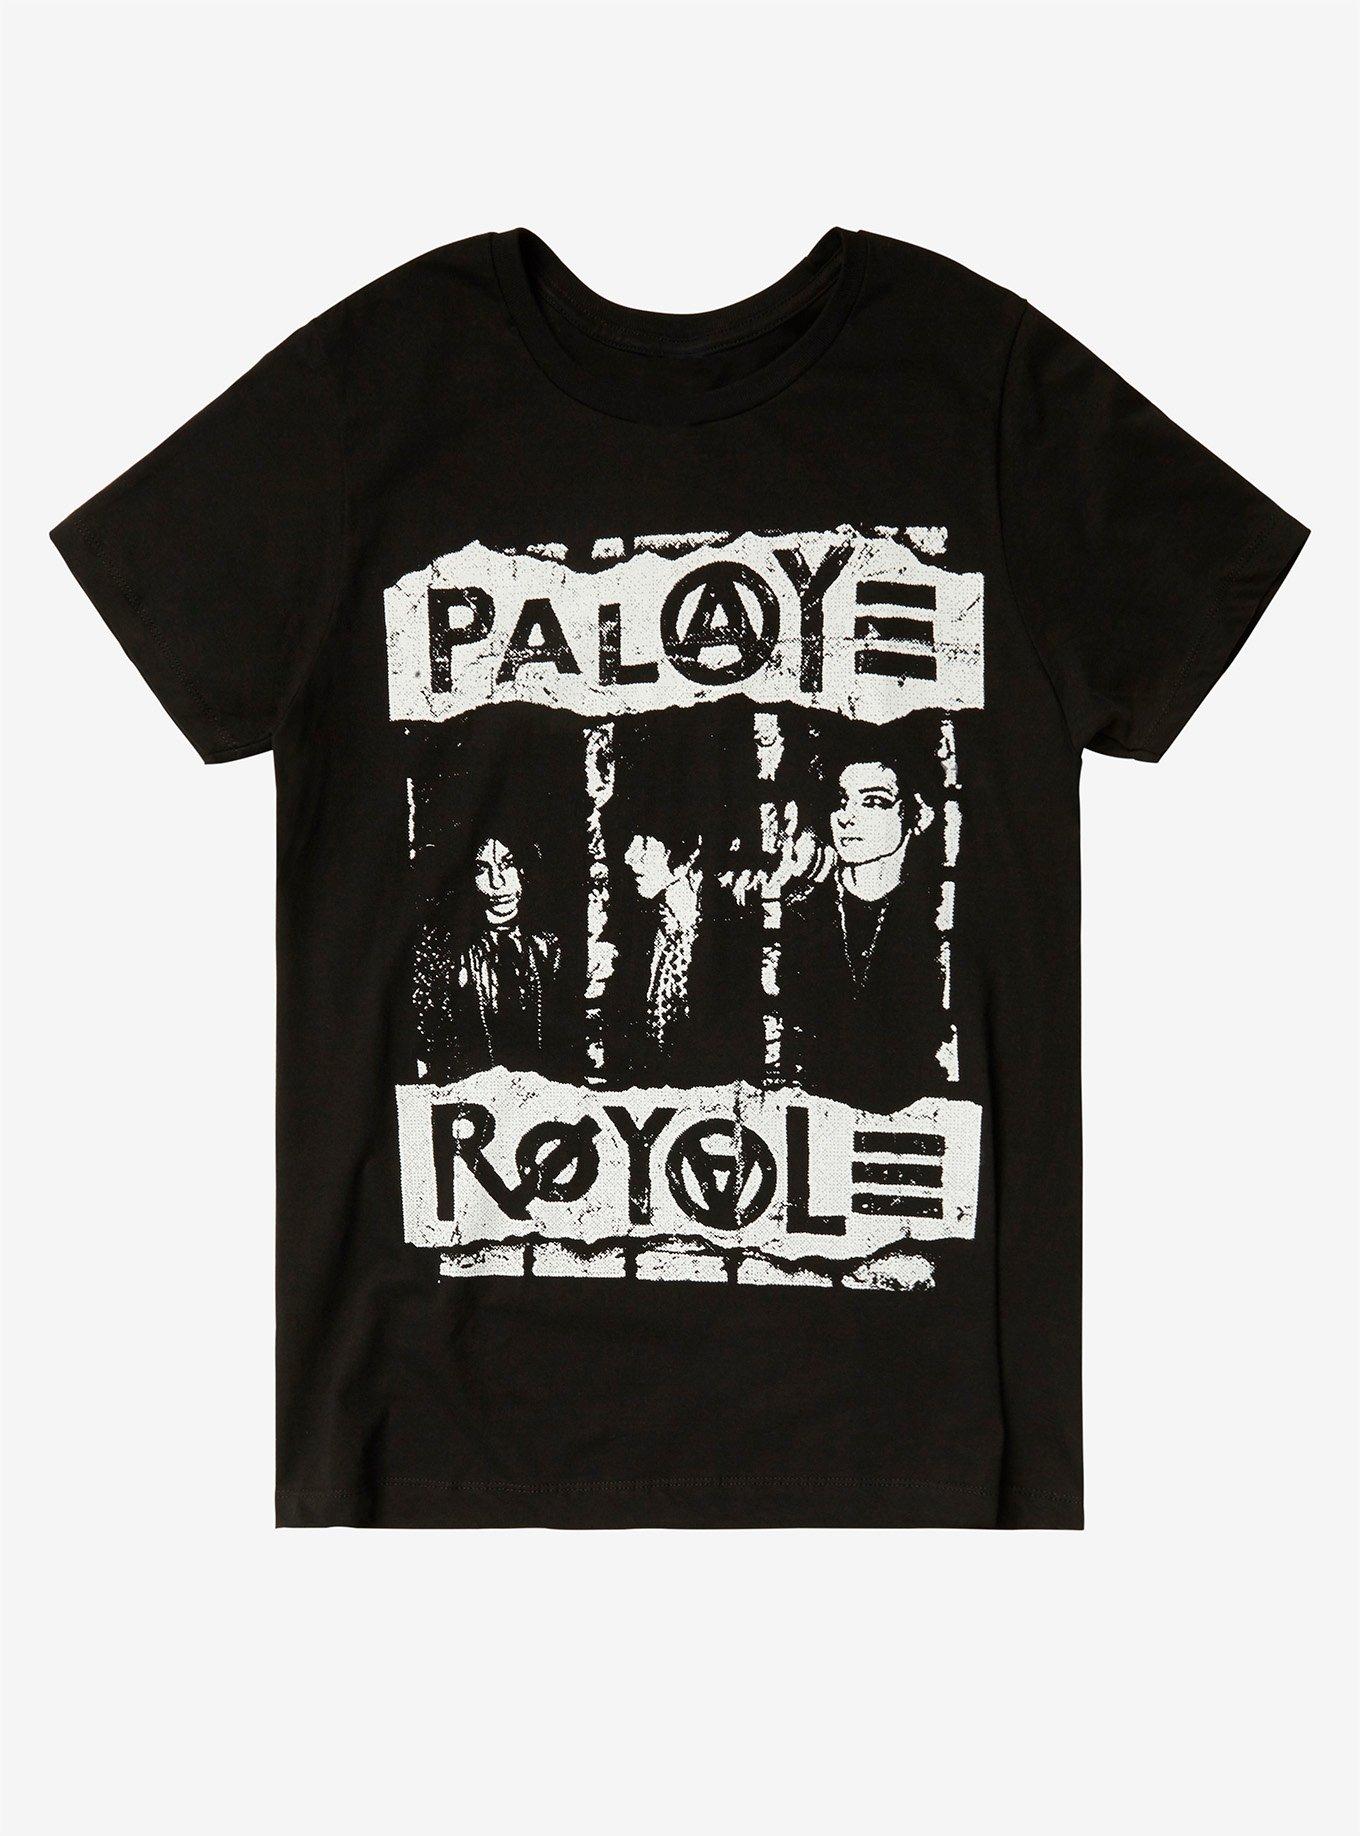 Palaye Royale Black & White Group Photo T-Shirt, BLACK, hi-res